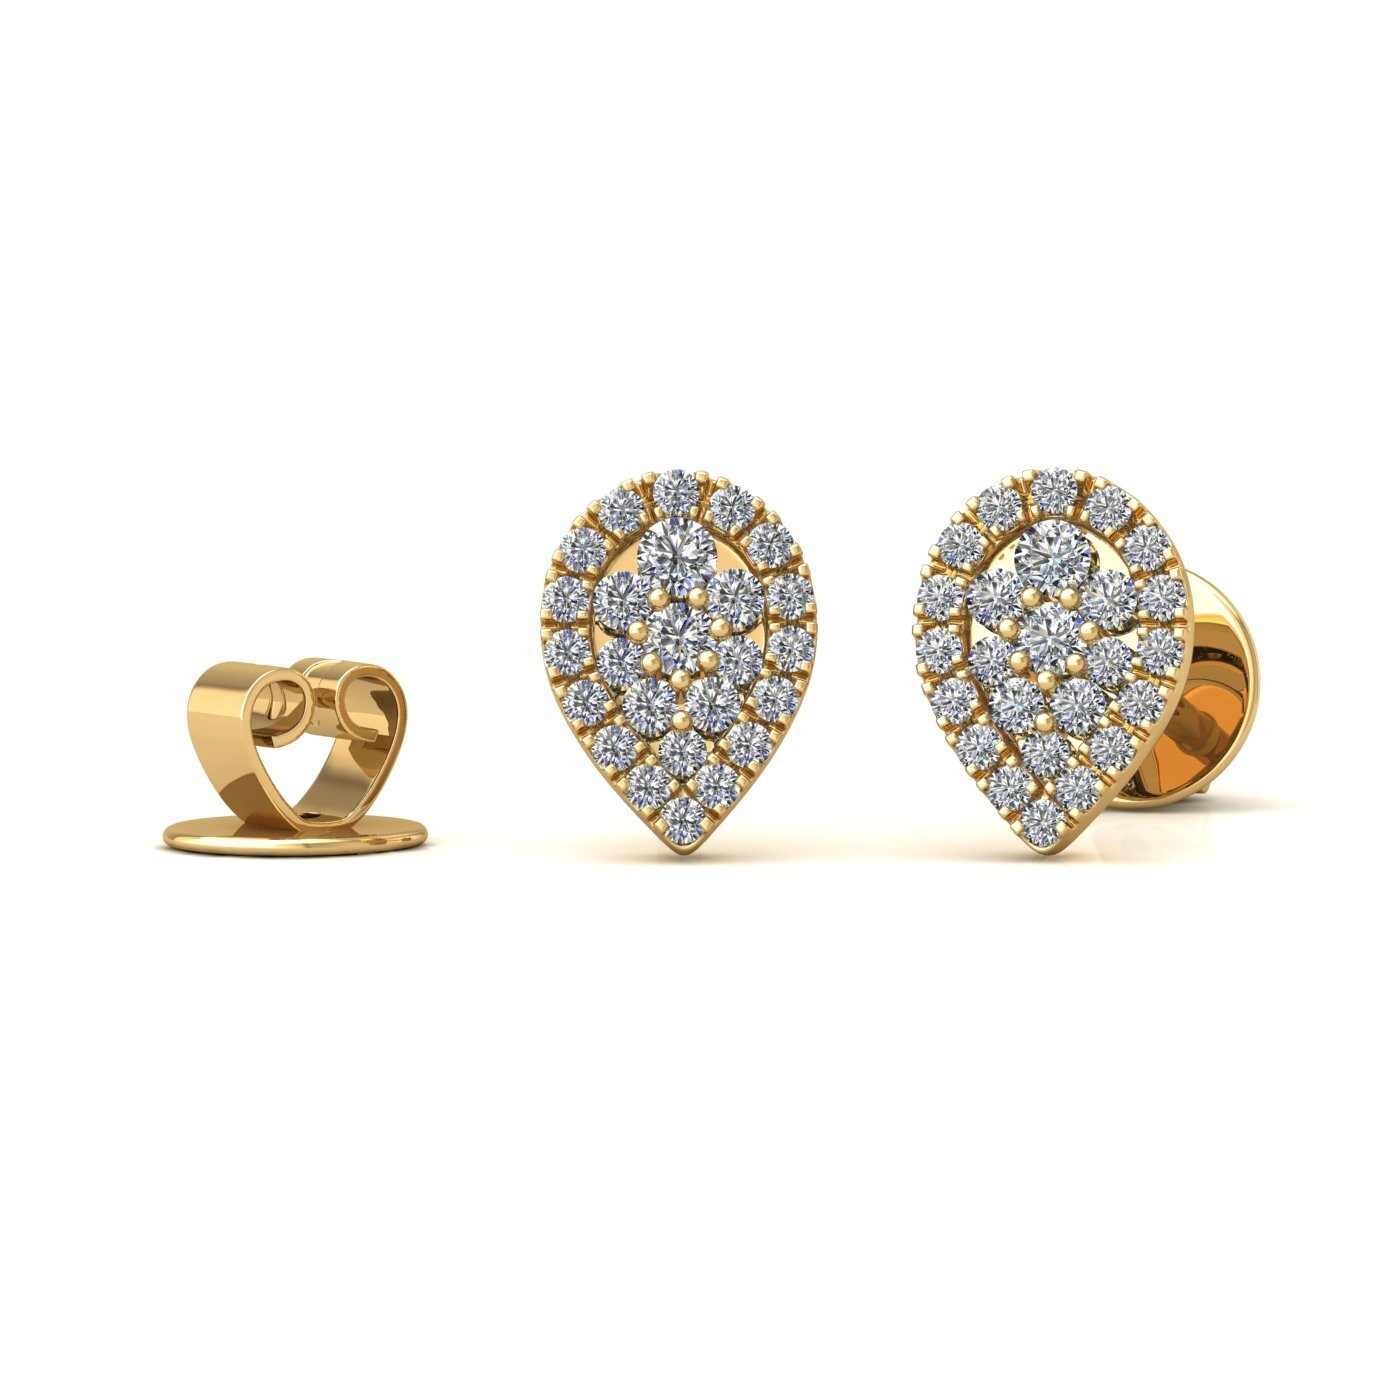 18k yellow gold  pear shaped illusion set diamond earrings 0.21 ct